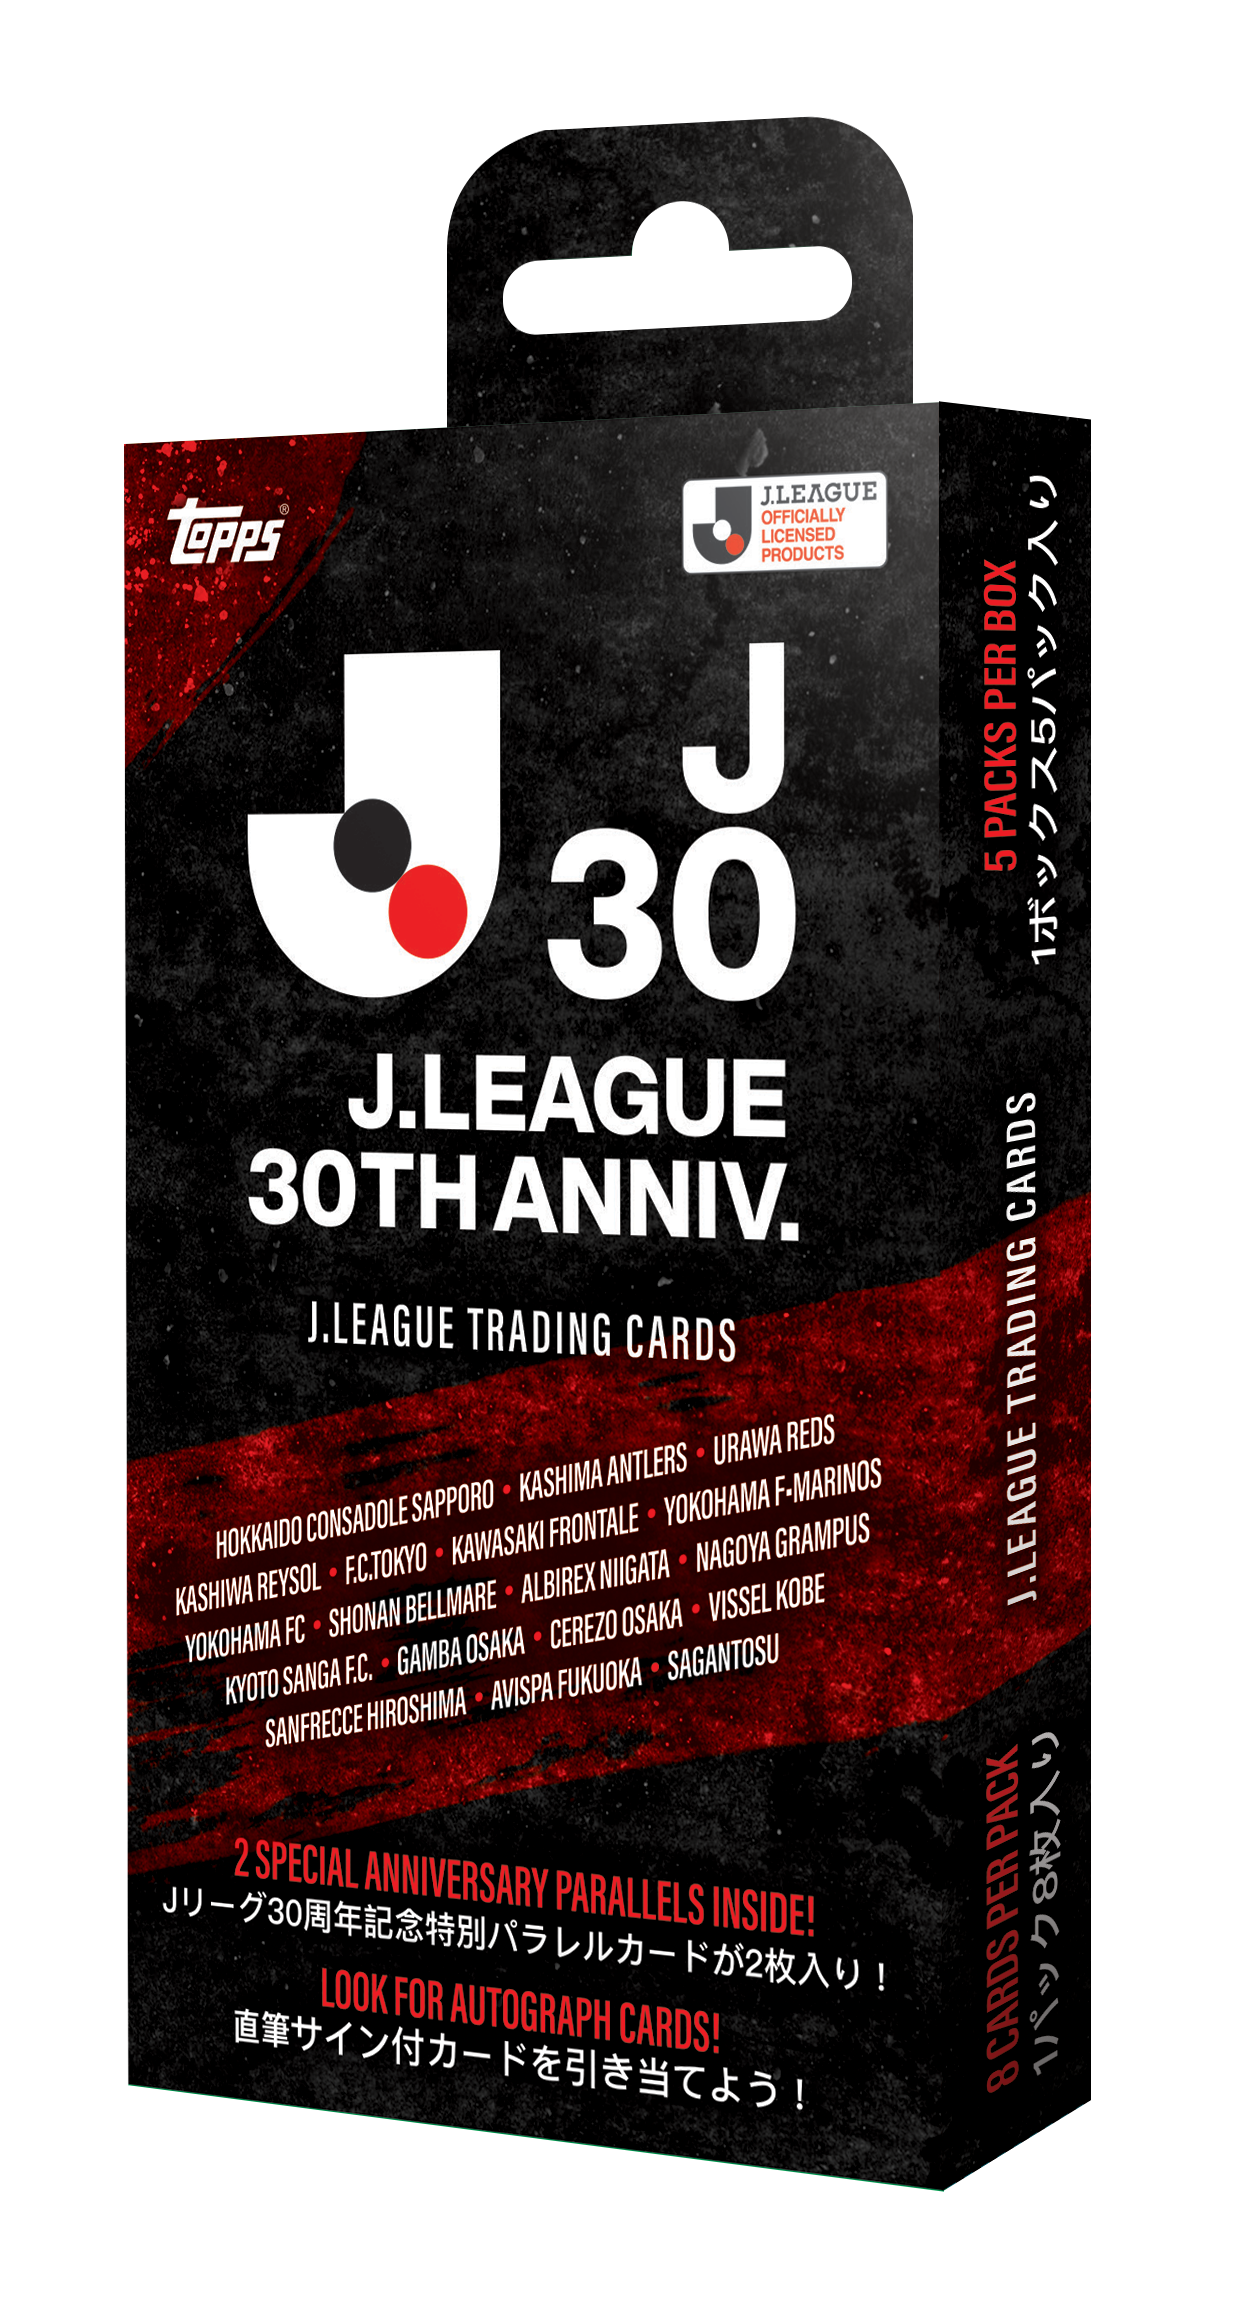 Jリーグ30周年記念カード(Topps J.LEAGUE 30th ANNIVERSARY)